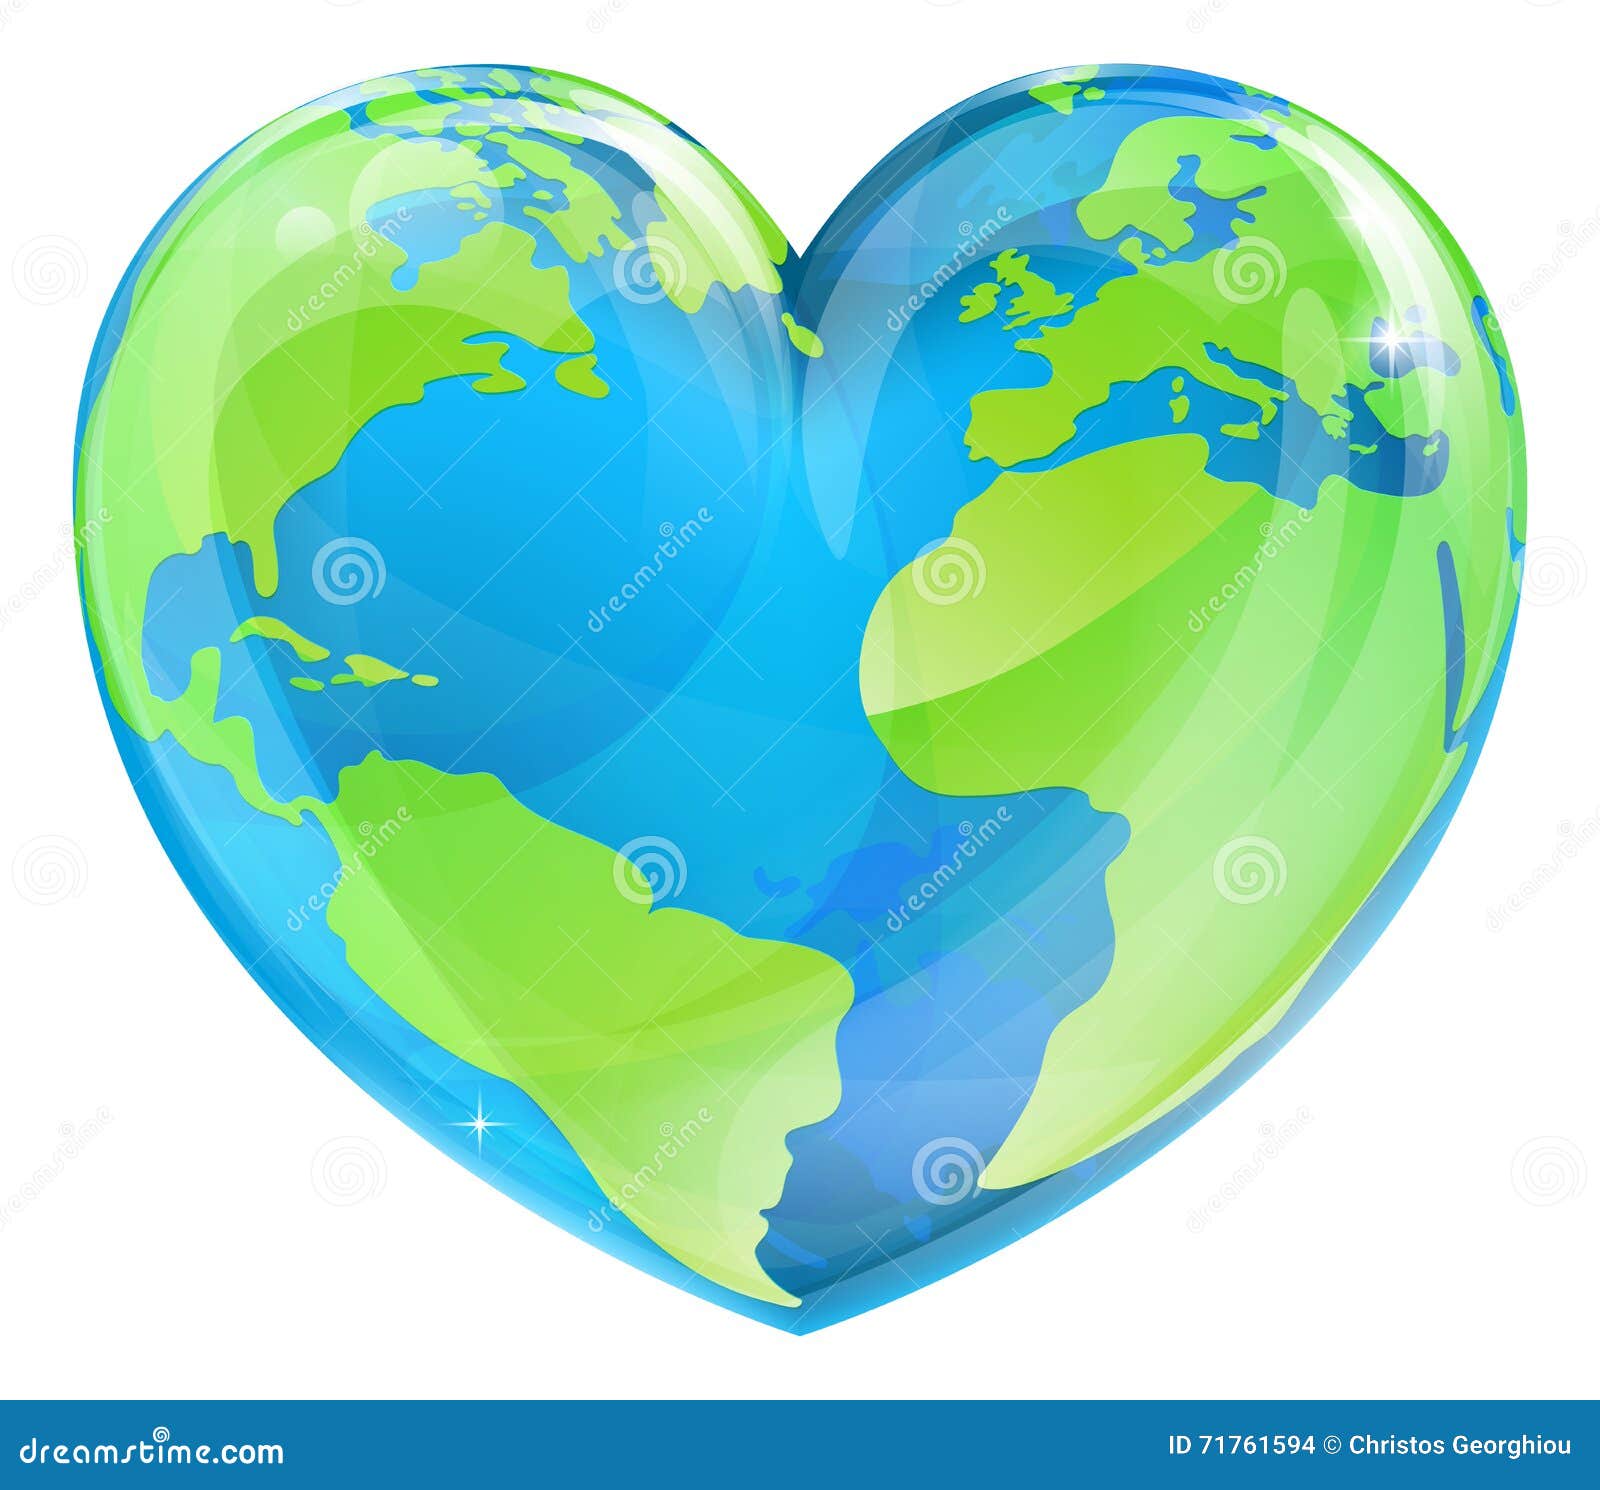 earth day heart